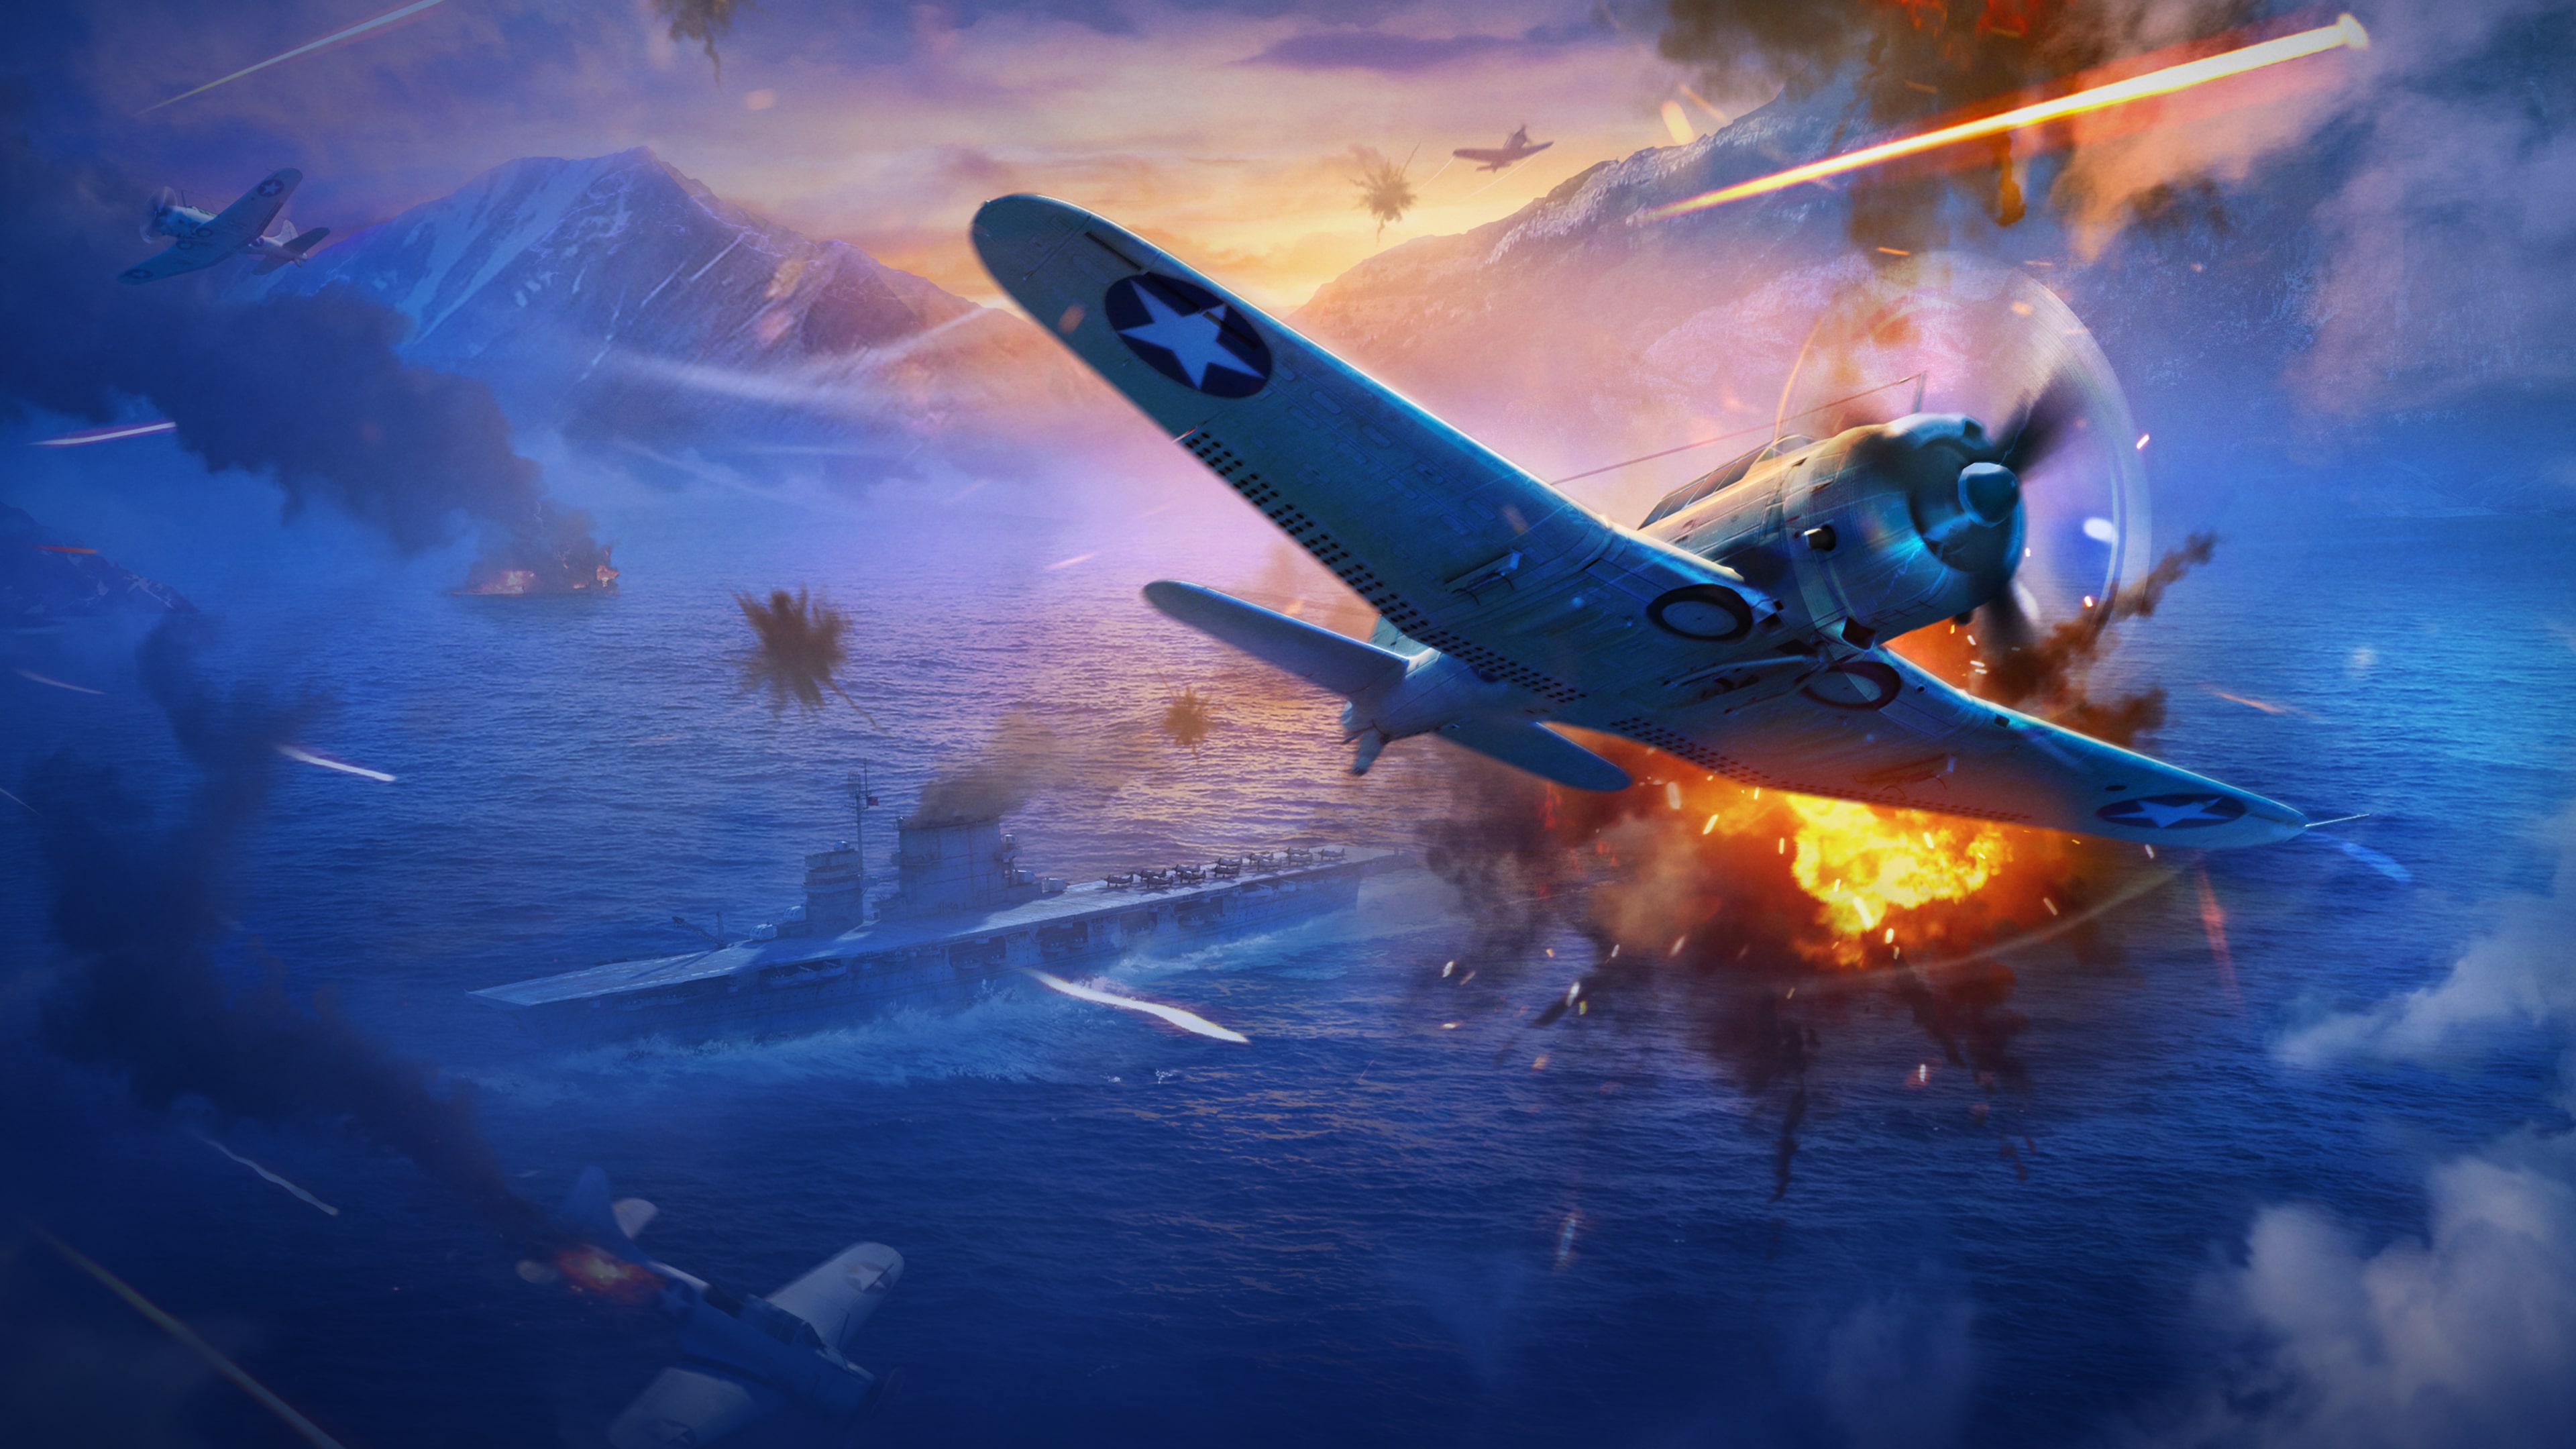 world of warships legends beta release date